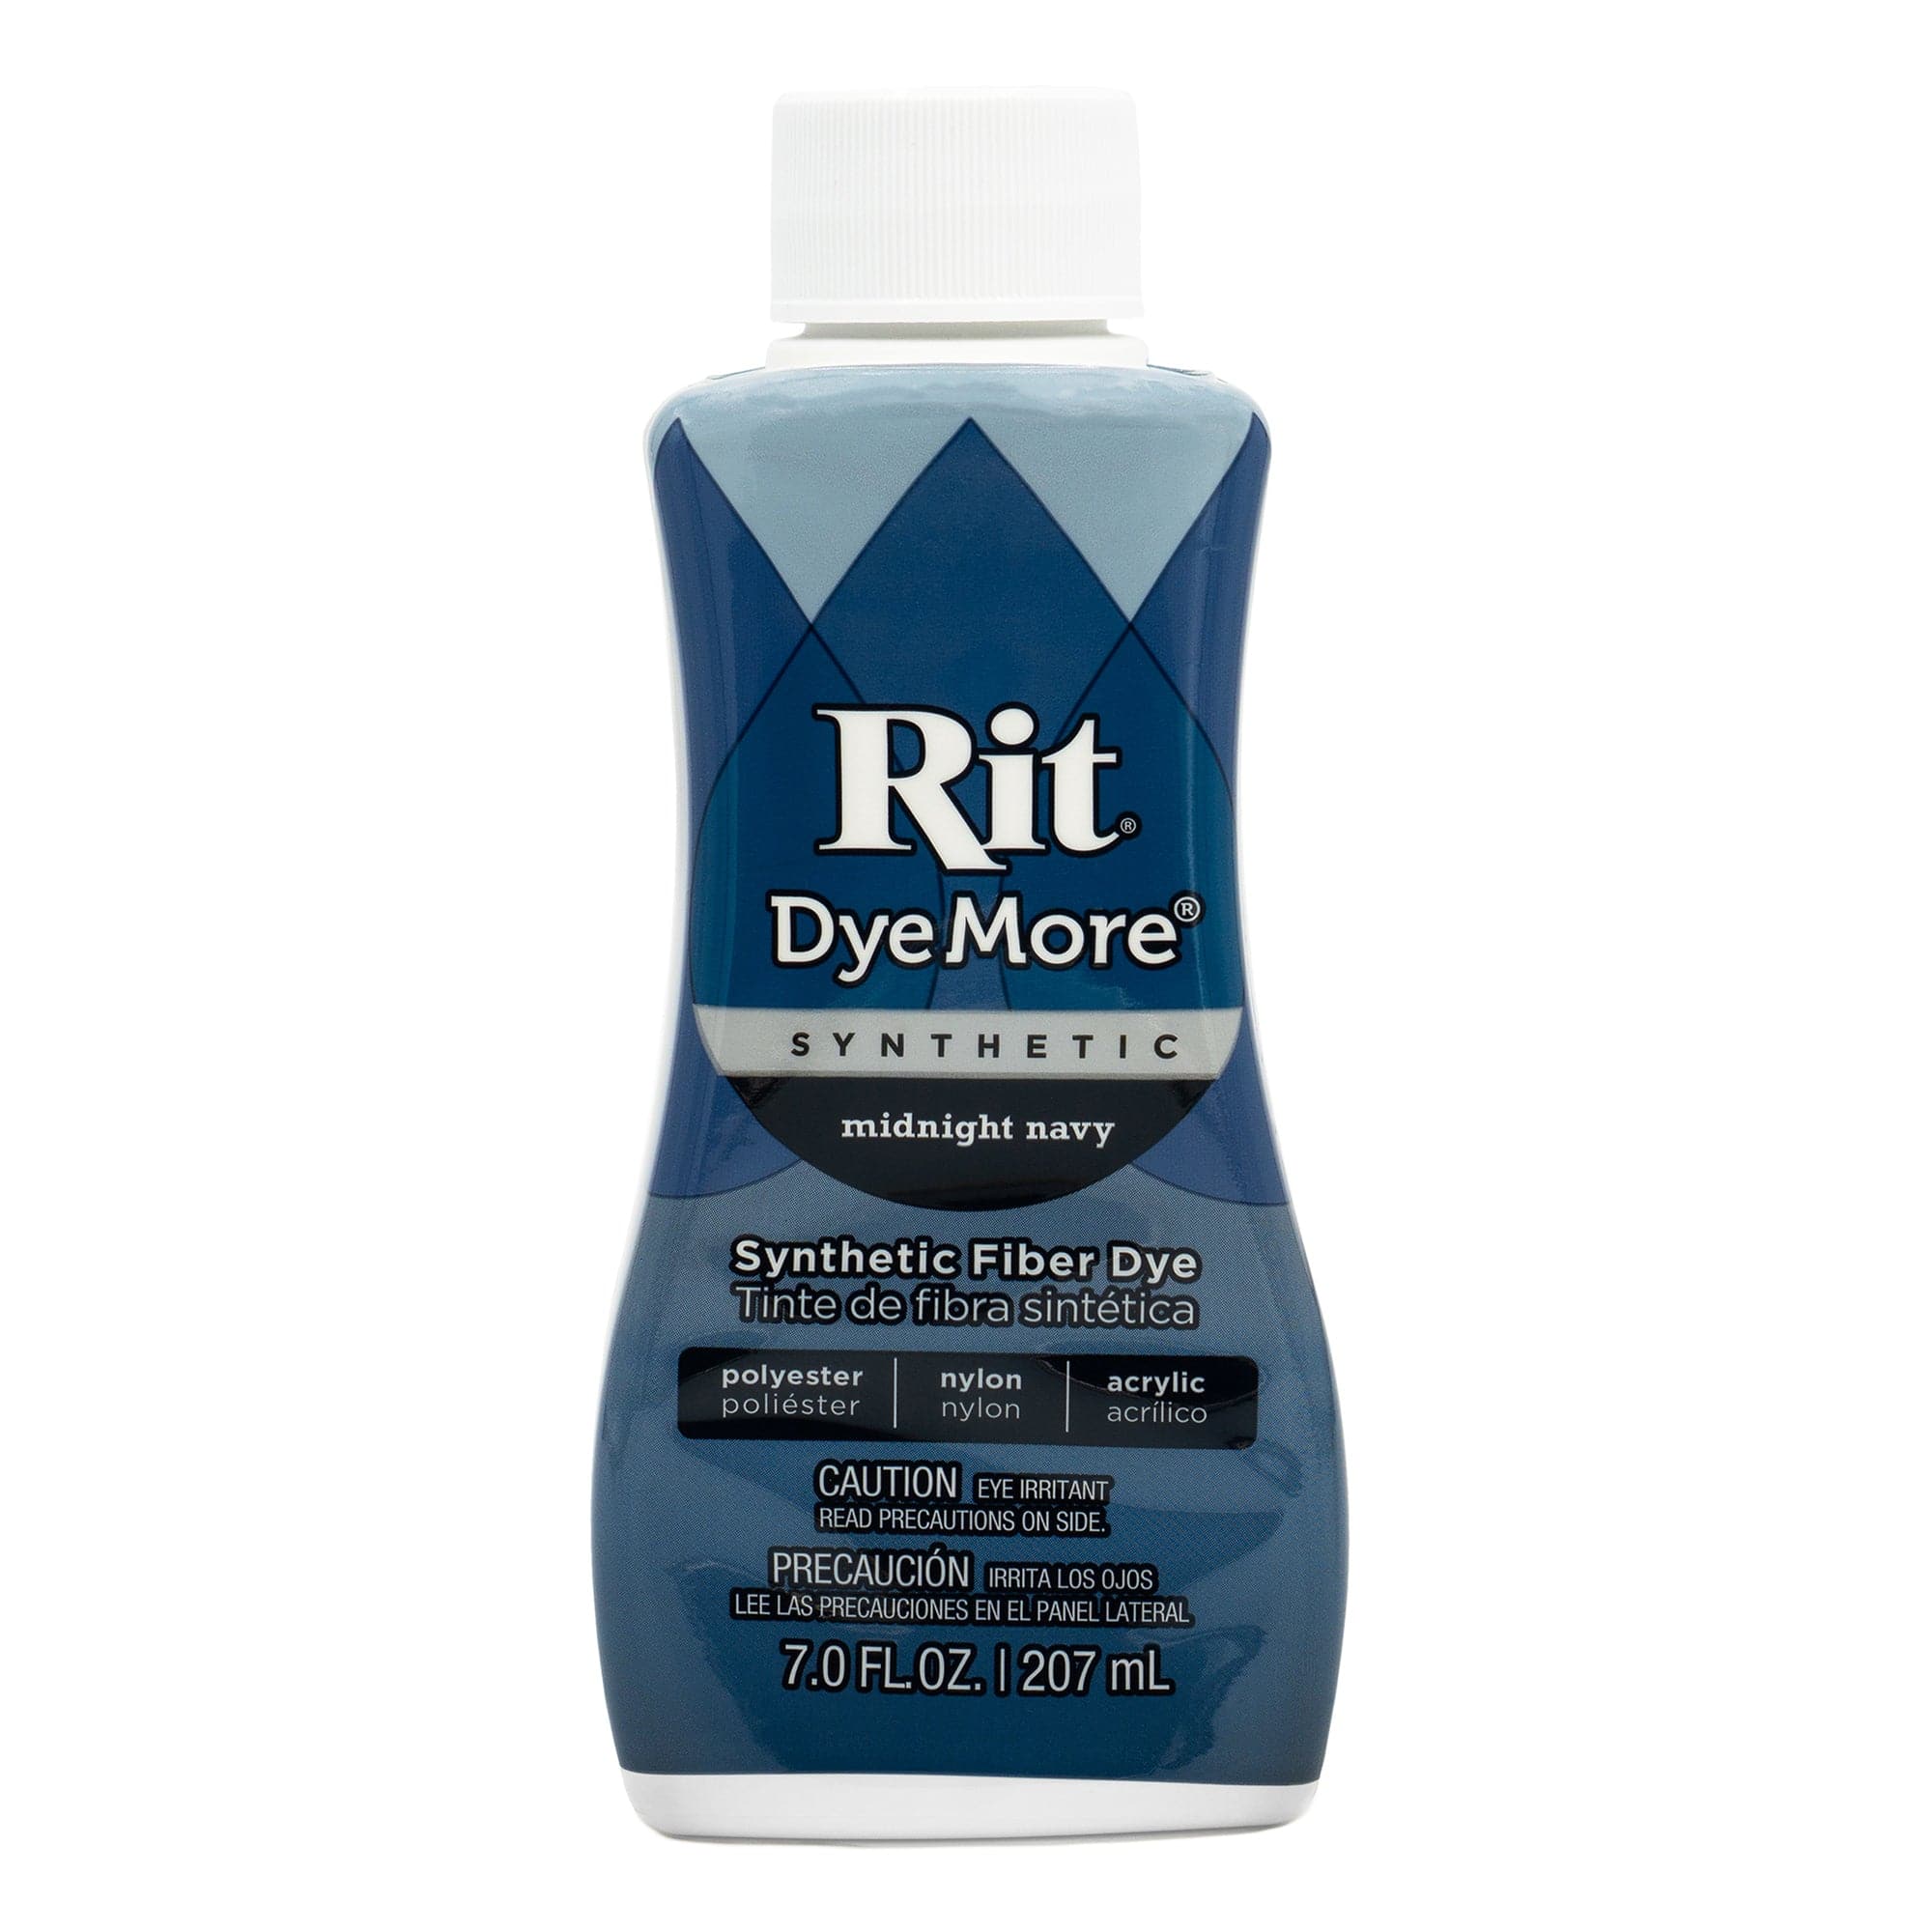 Rit DyeMore Synthetic Fiber Dye - Midnight Navy